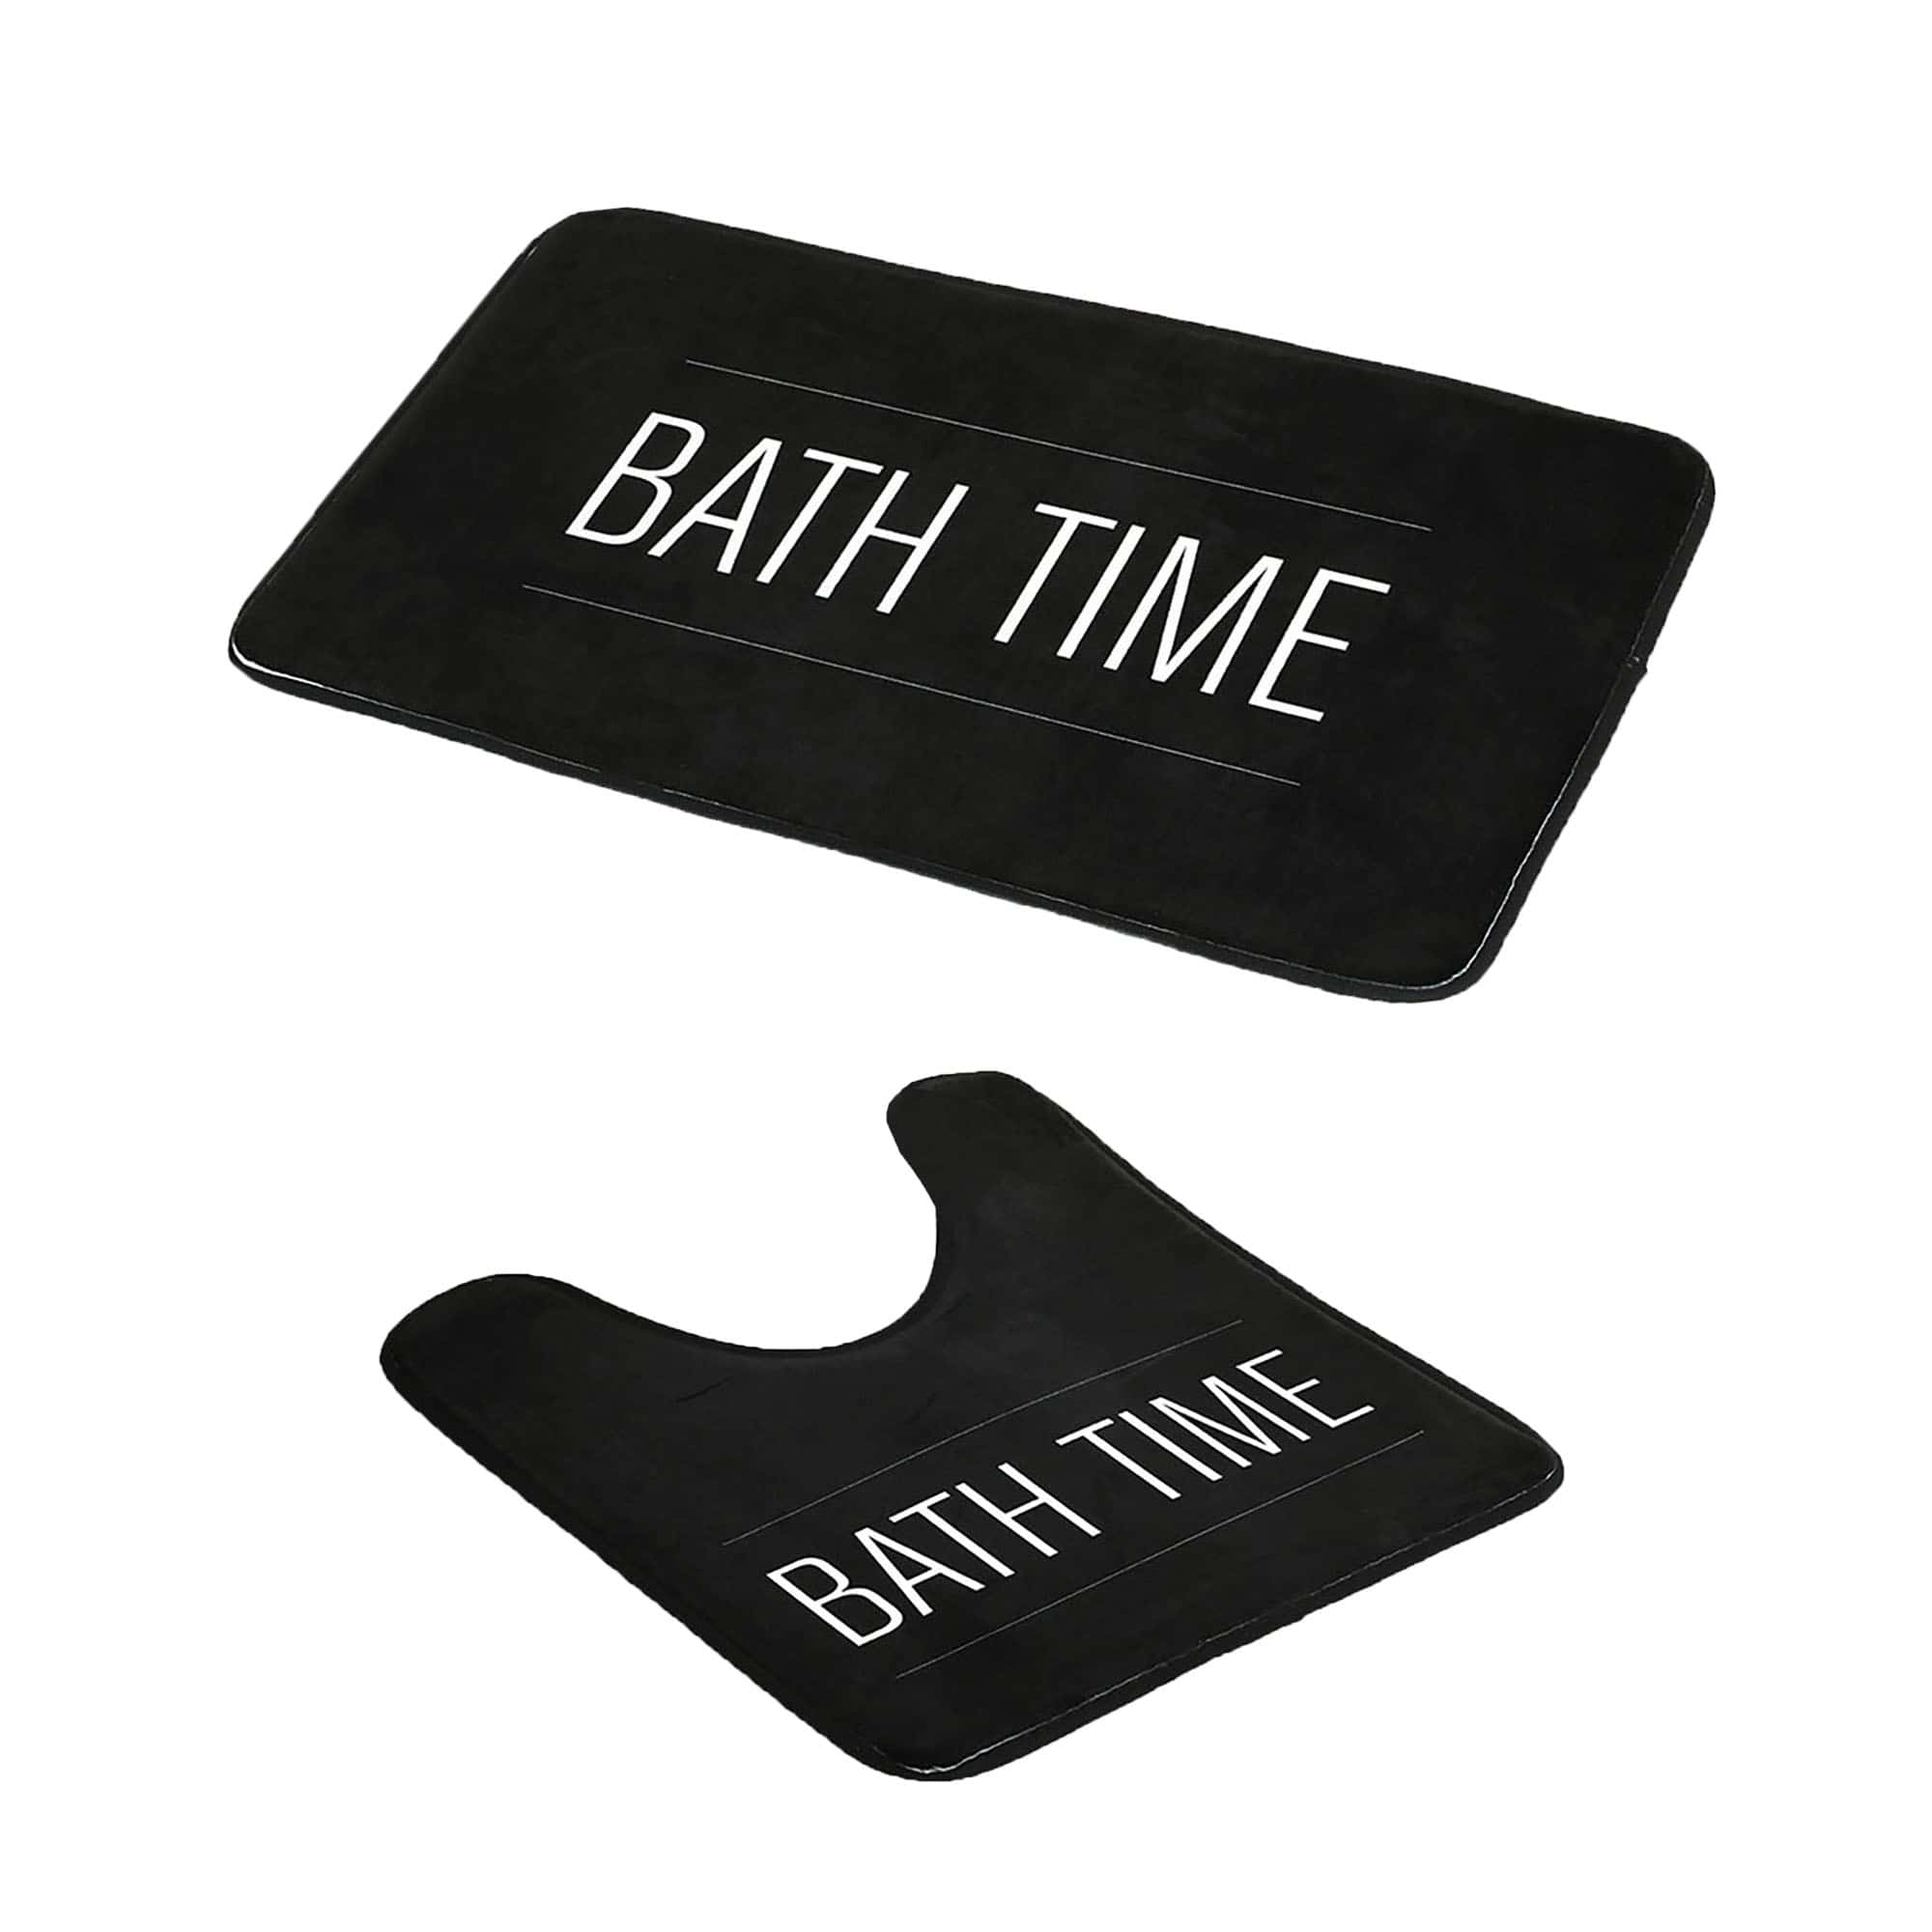 2-piece set of non-slip microfiber bathmat and contour rug in black